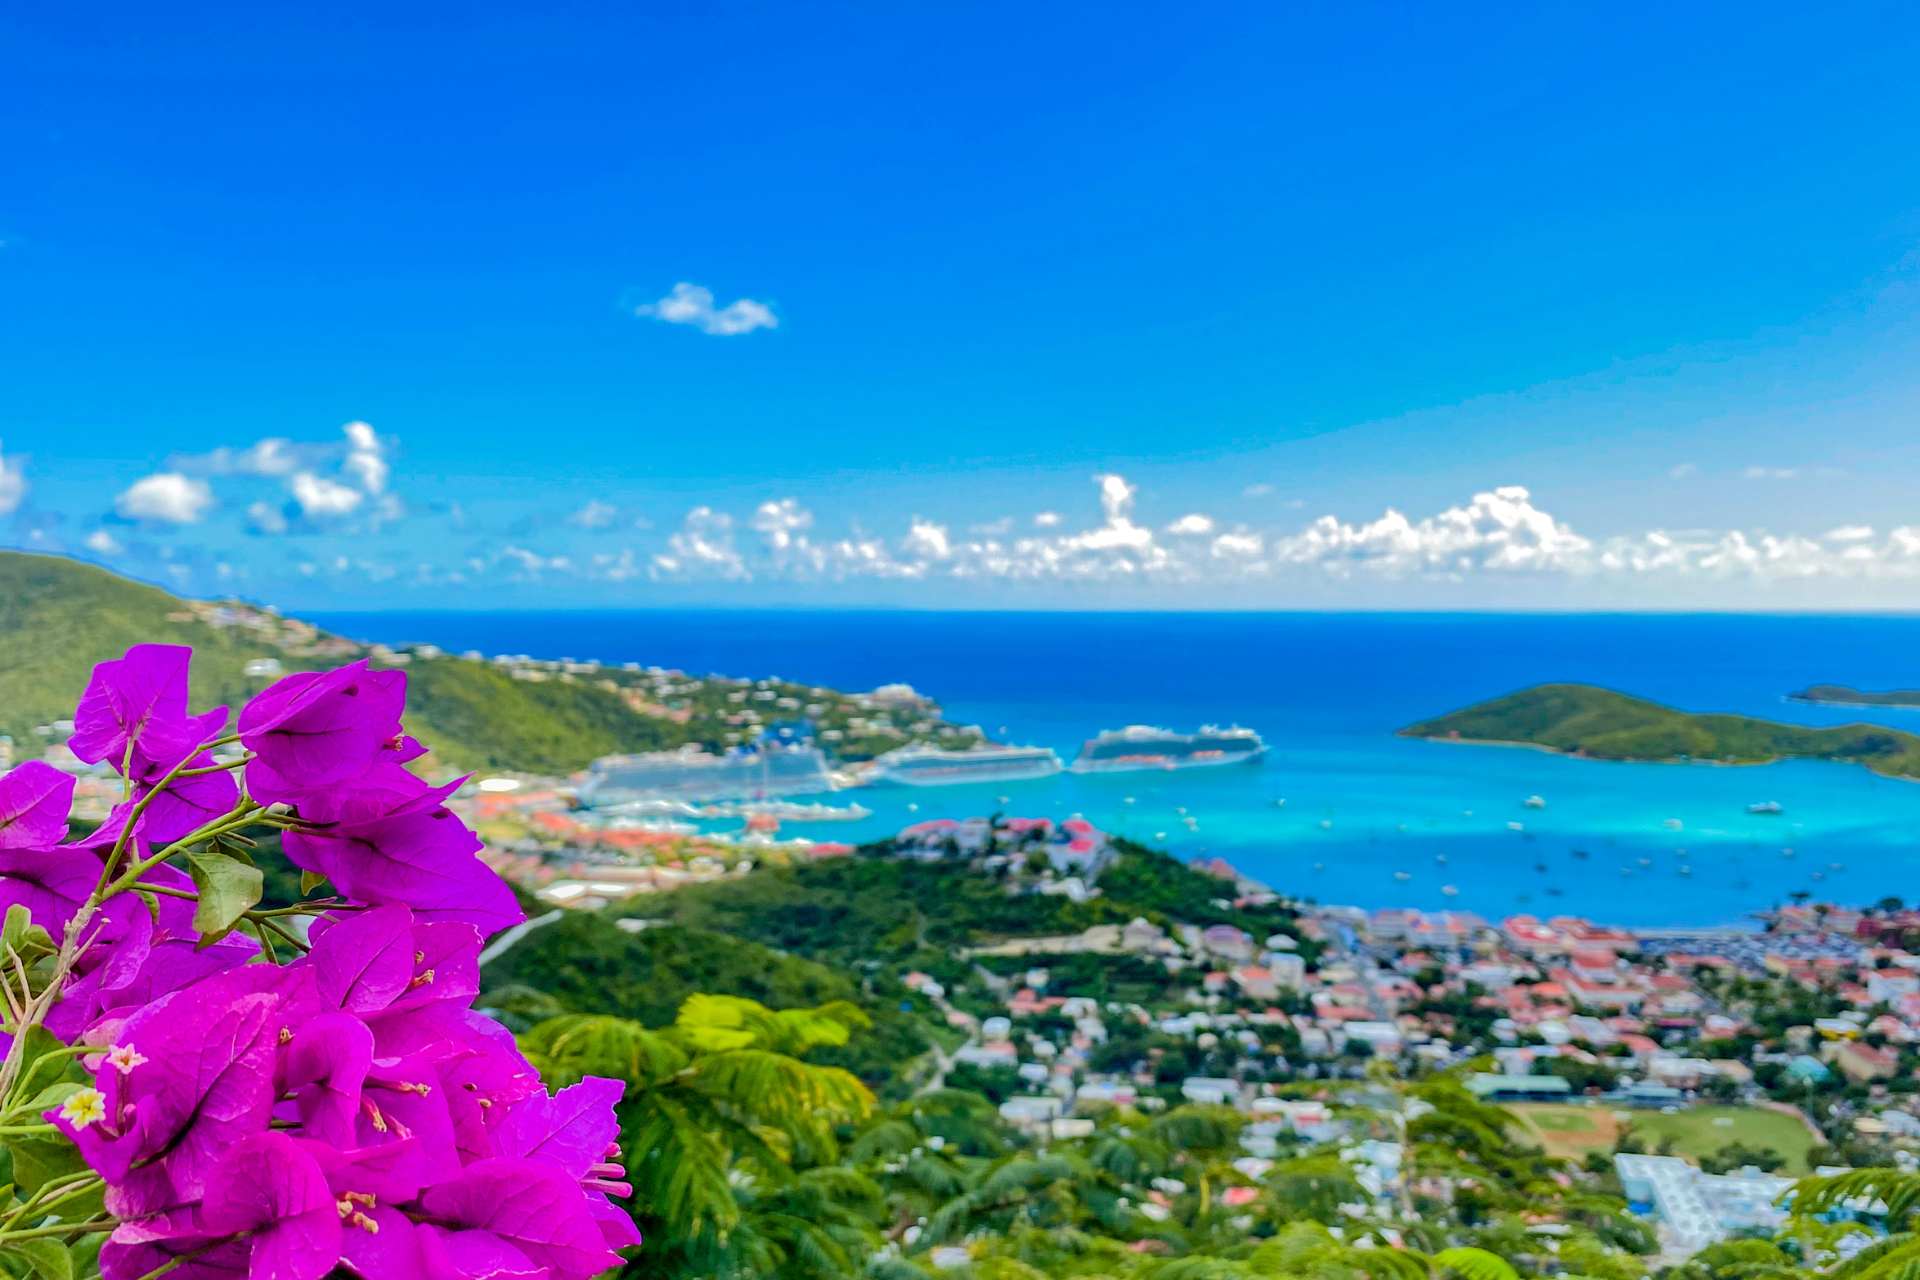 Charlotte Amalie, St Thomas, US Virgin Islands ©Getty Images